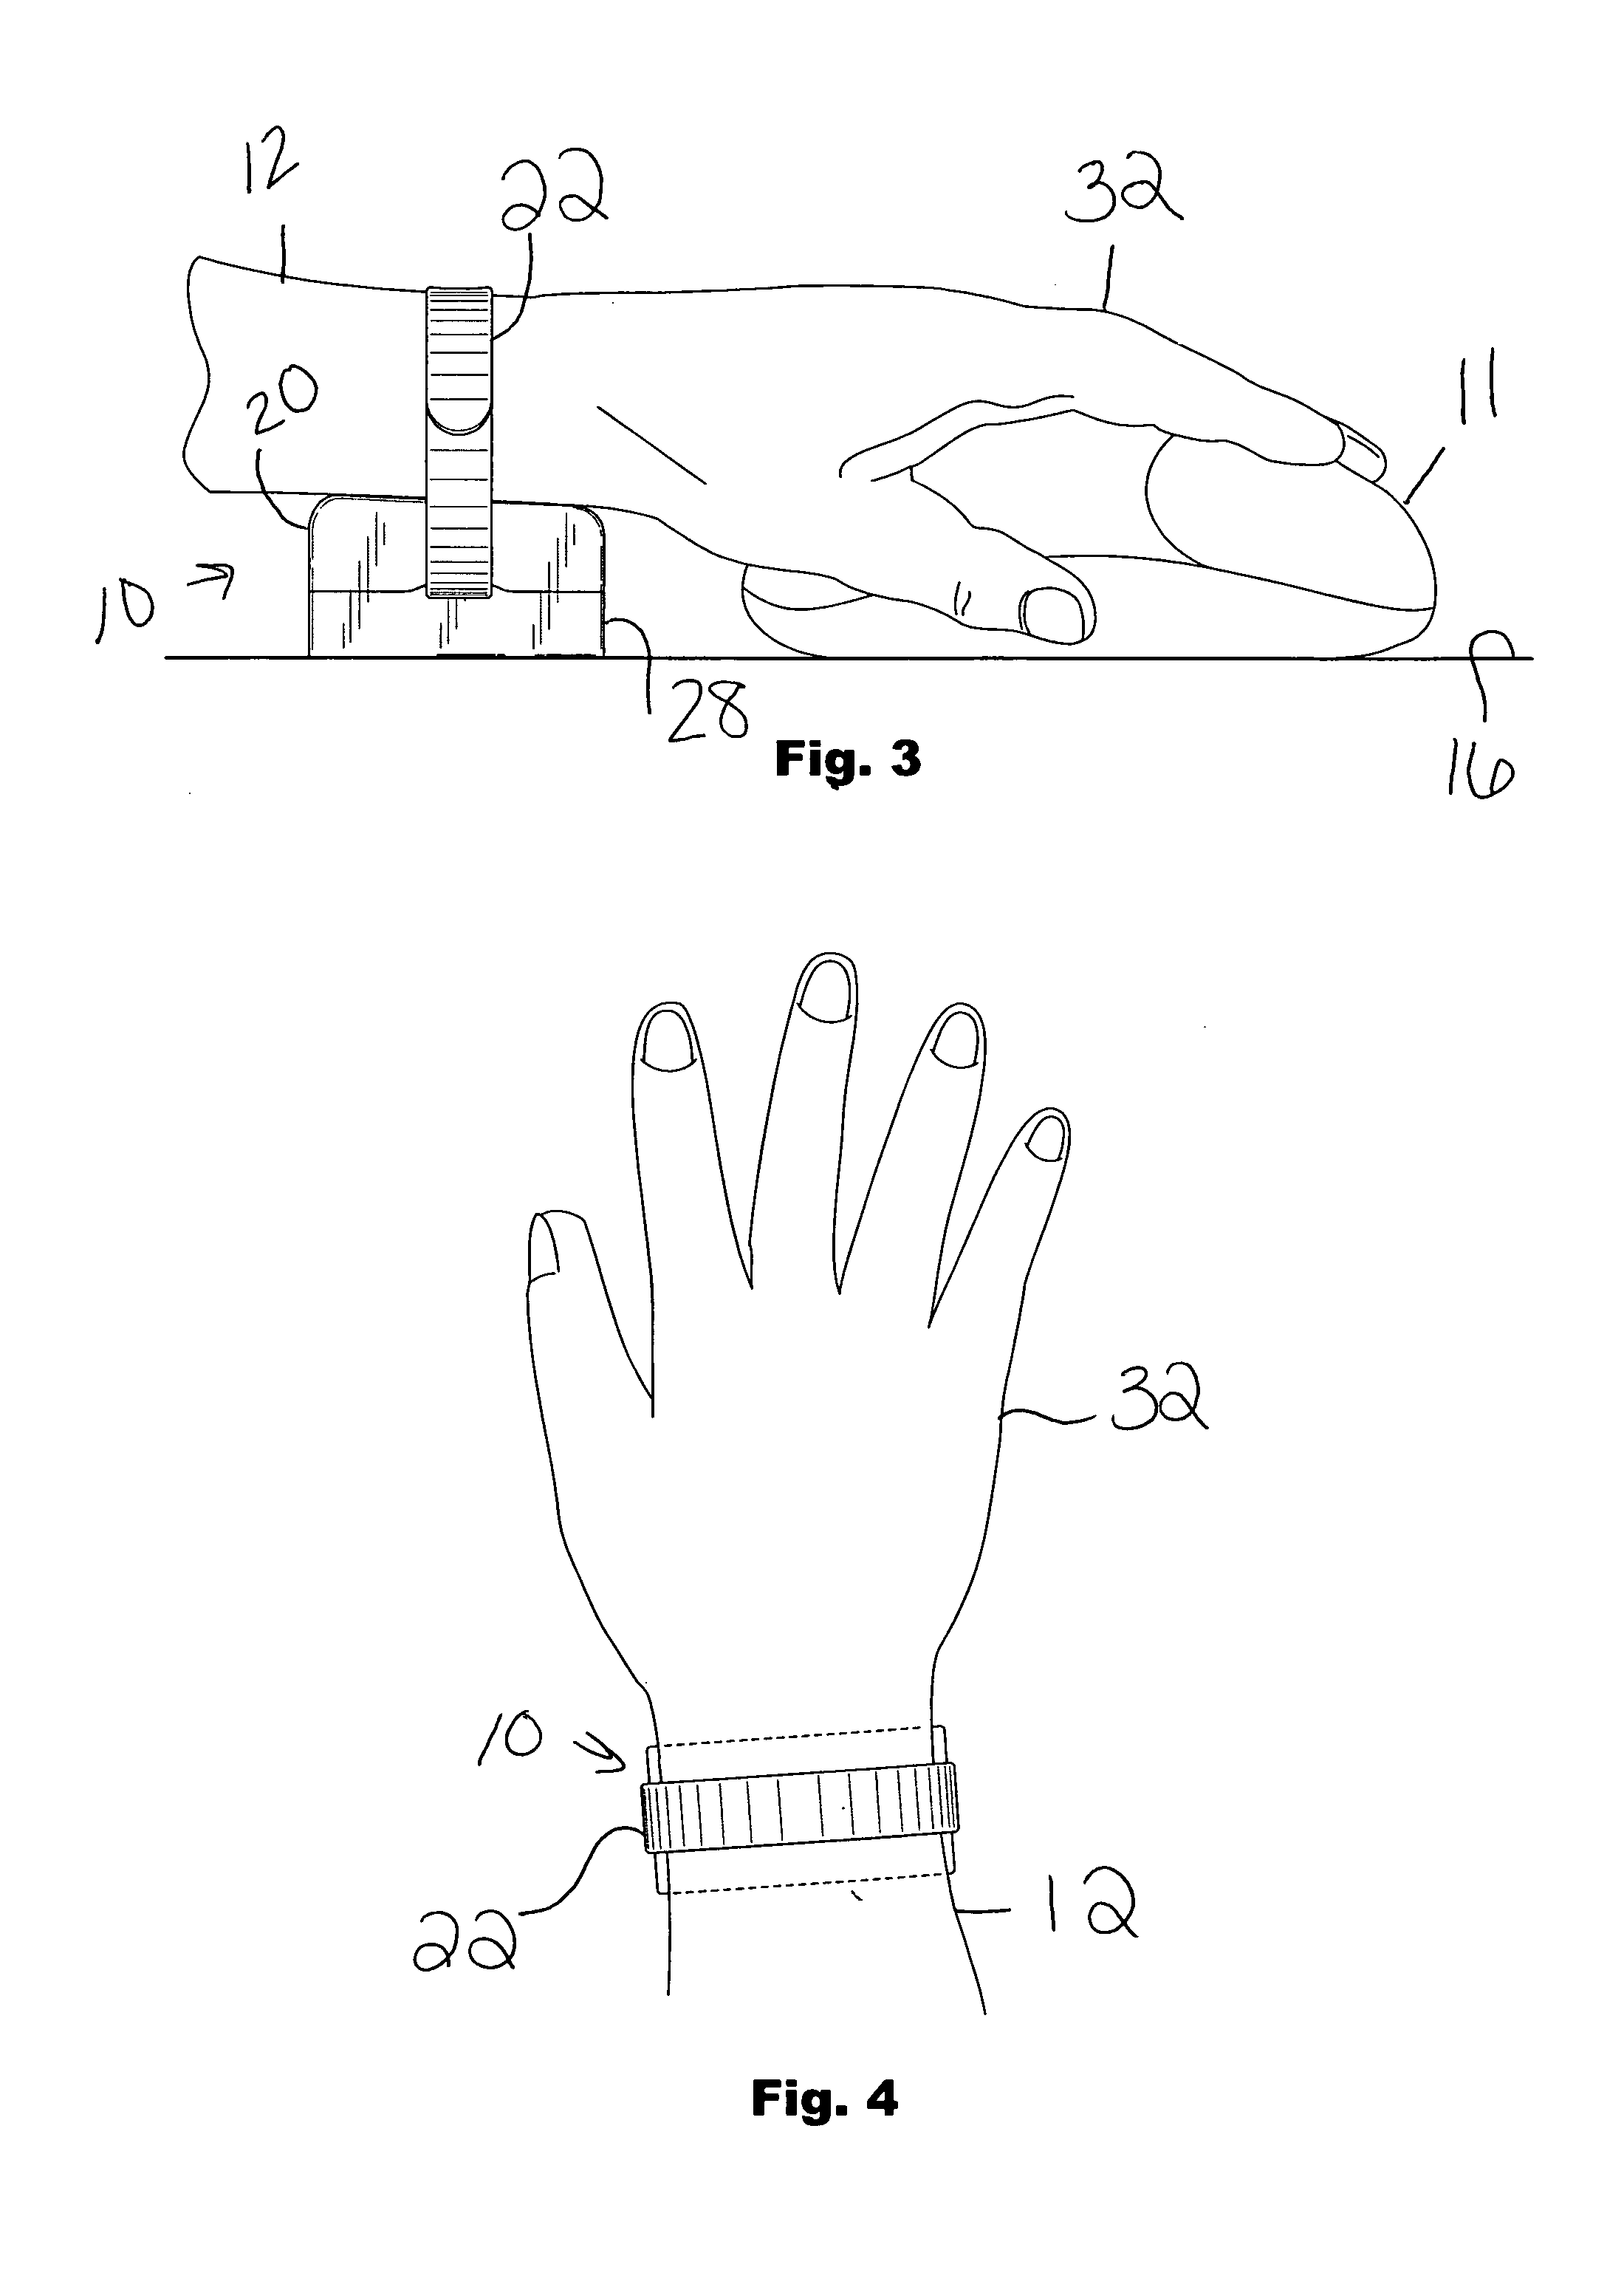 Portable wrist rest system